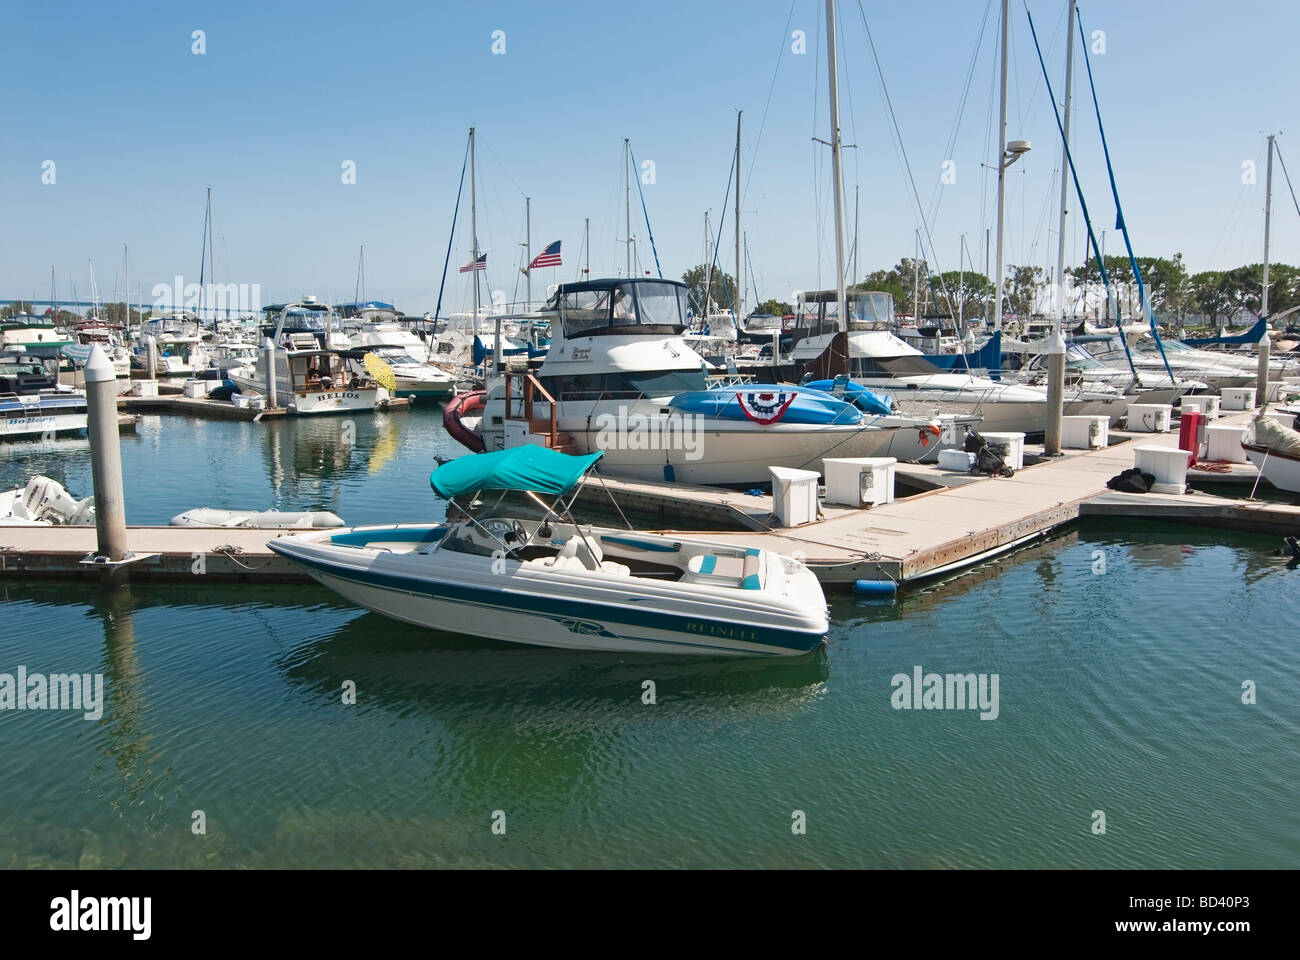 Boats at a marina. Stock Photo